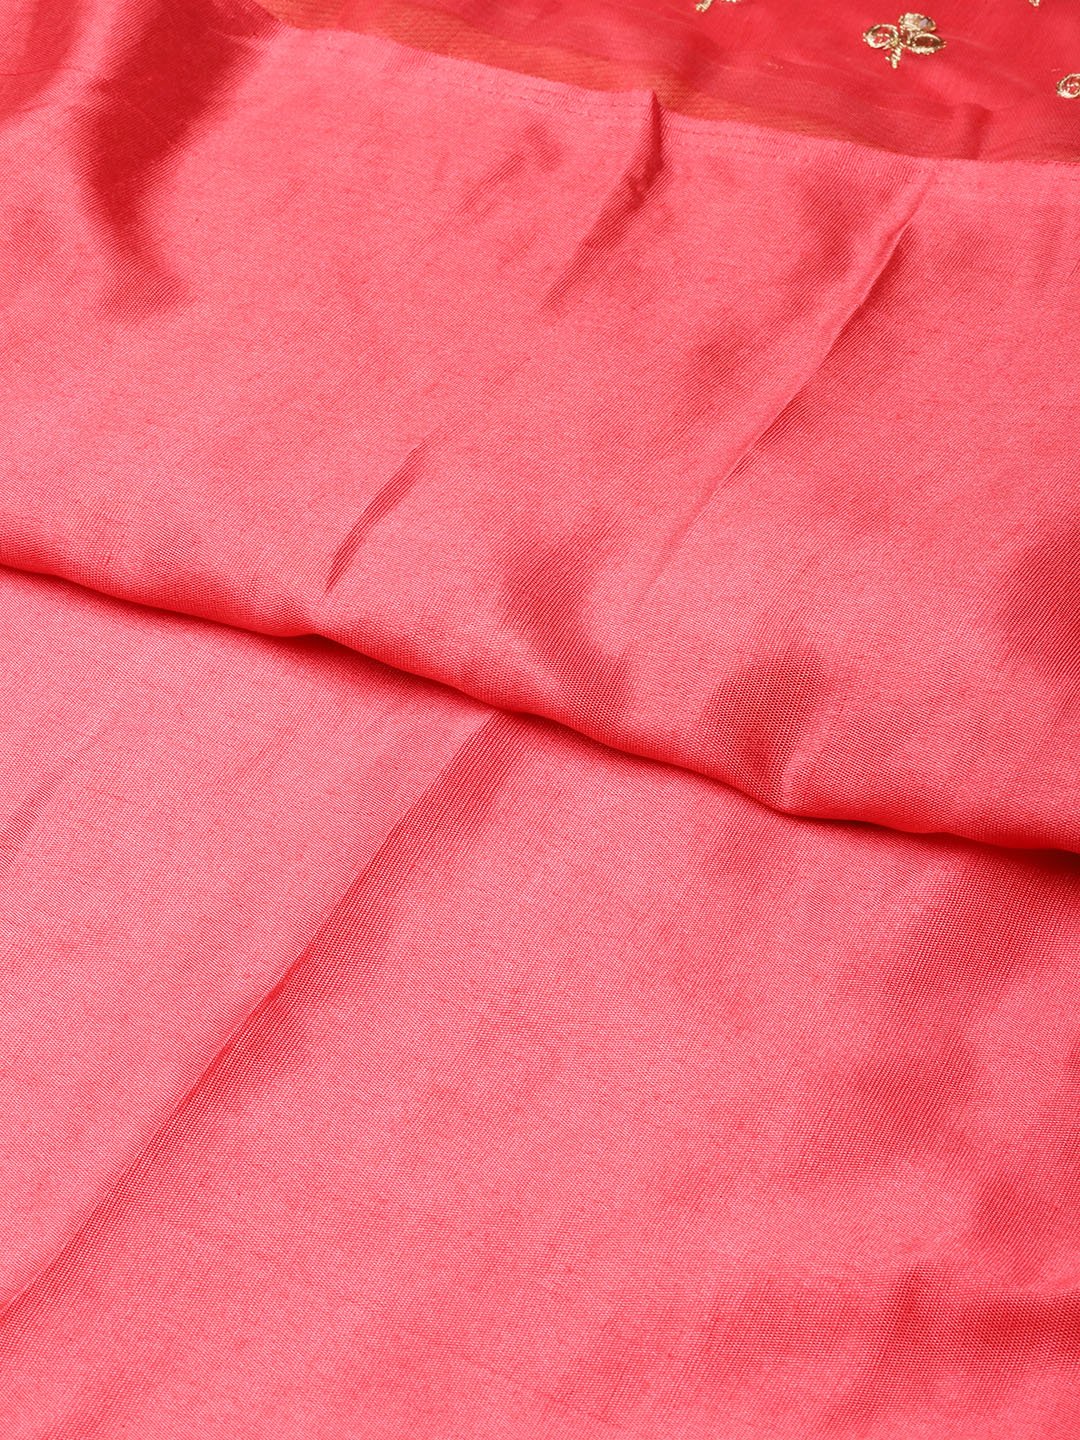 Ishin Women's Chanderi Cotton Red Embellished A-Line Kurta Palazzo Dupatta Set